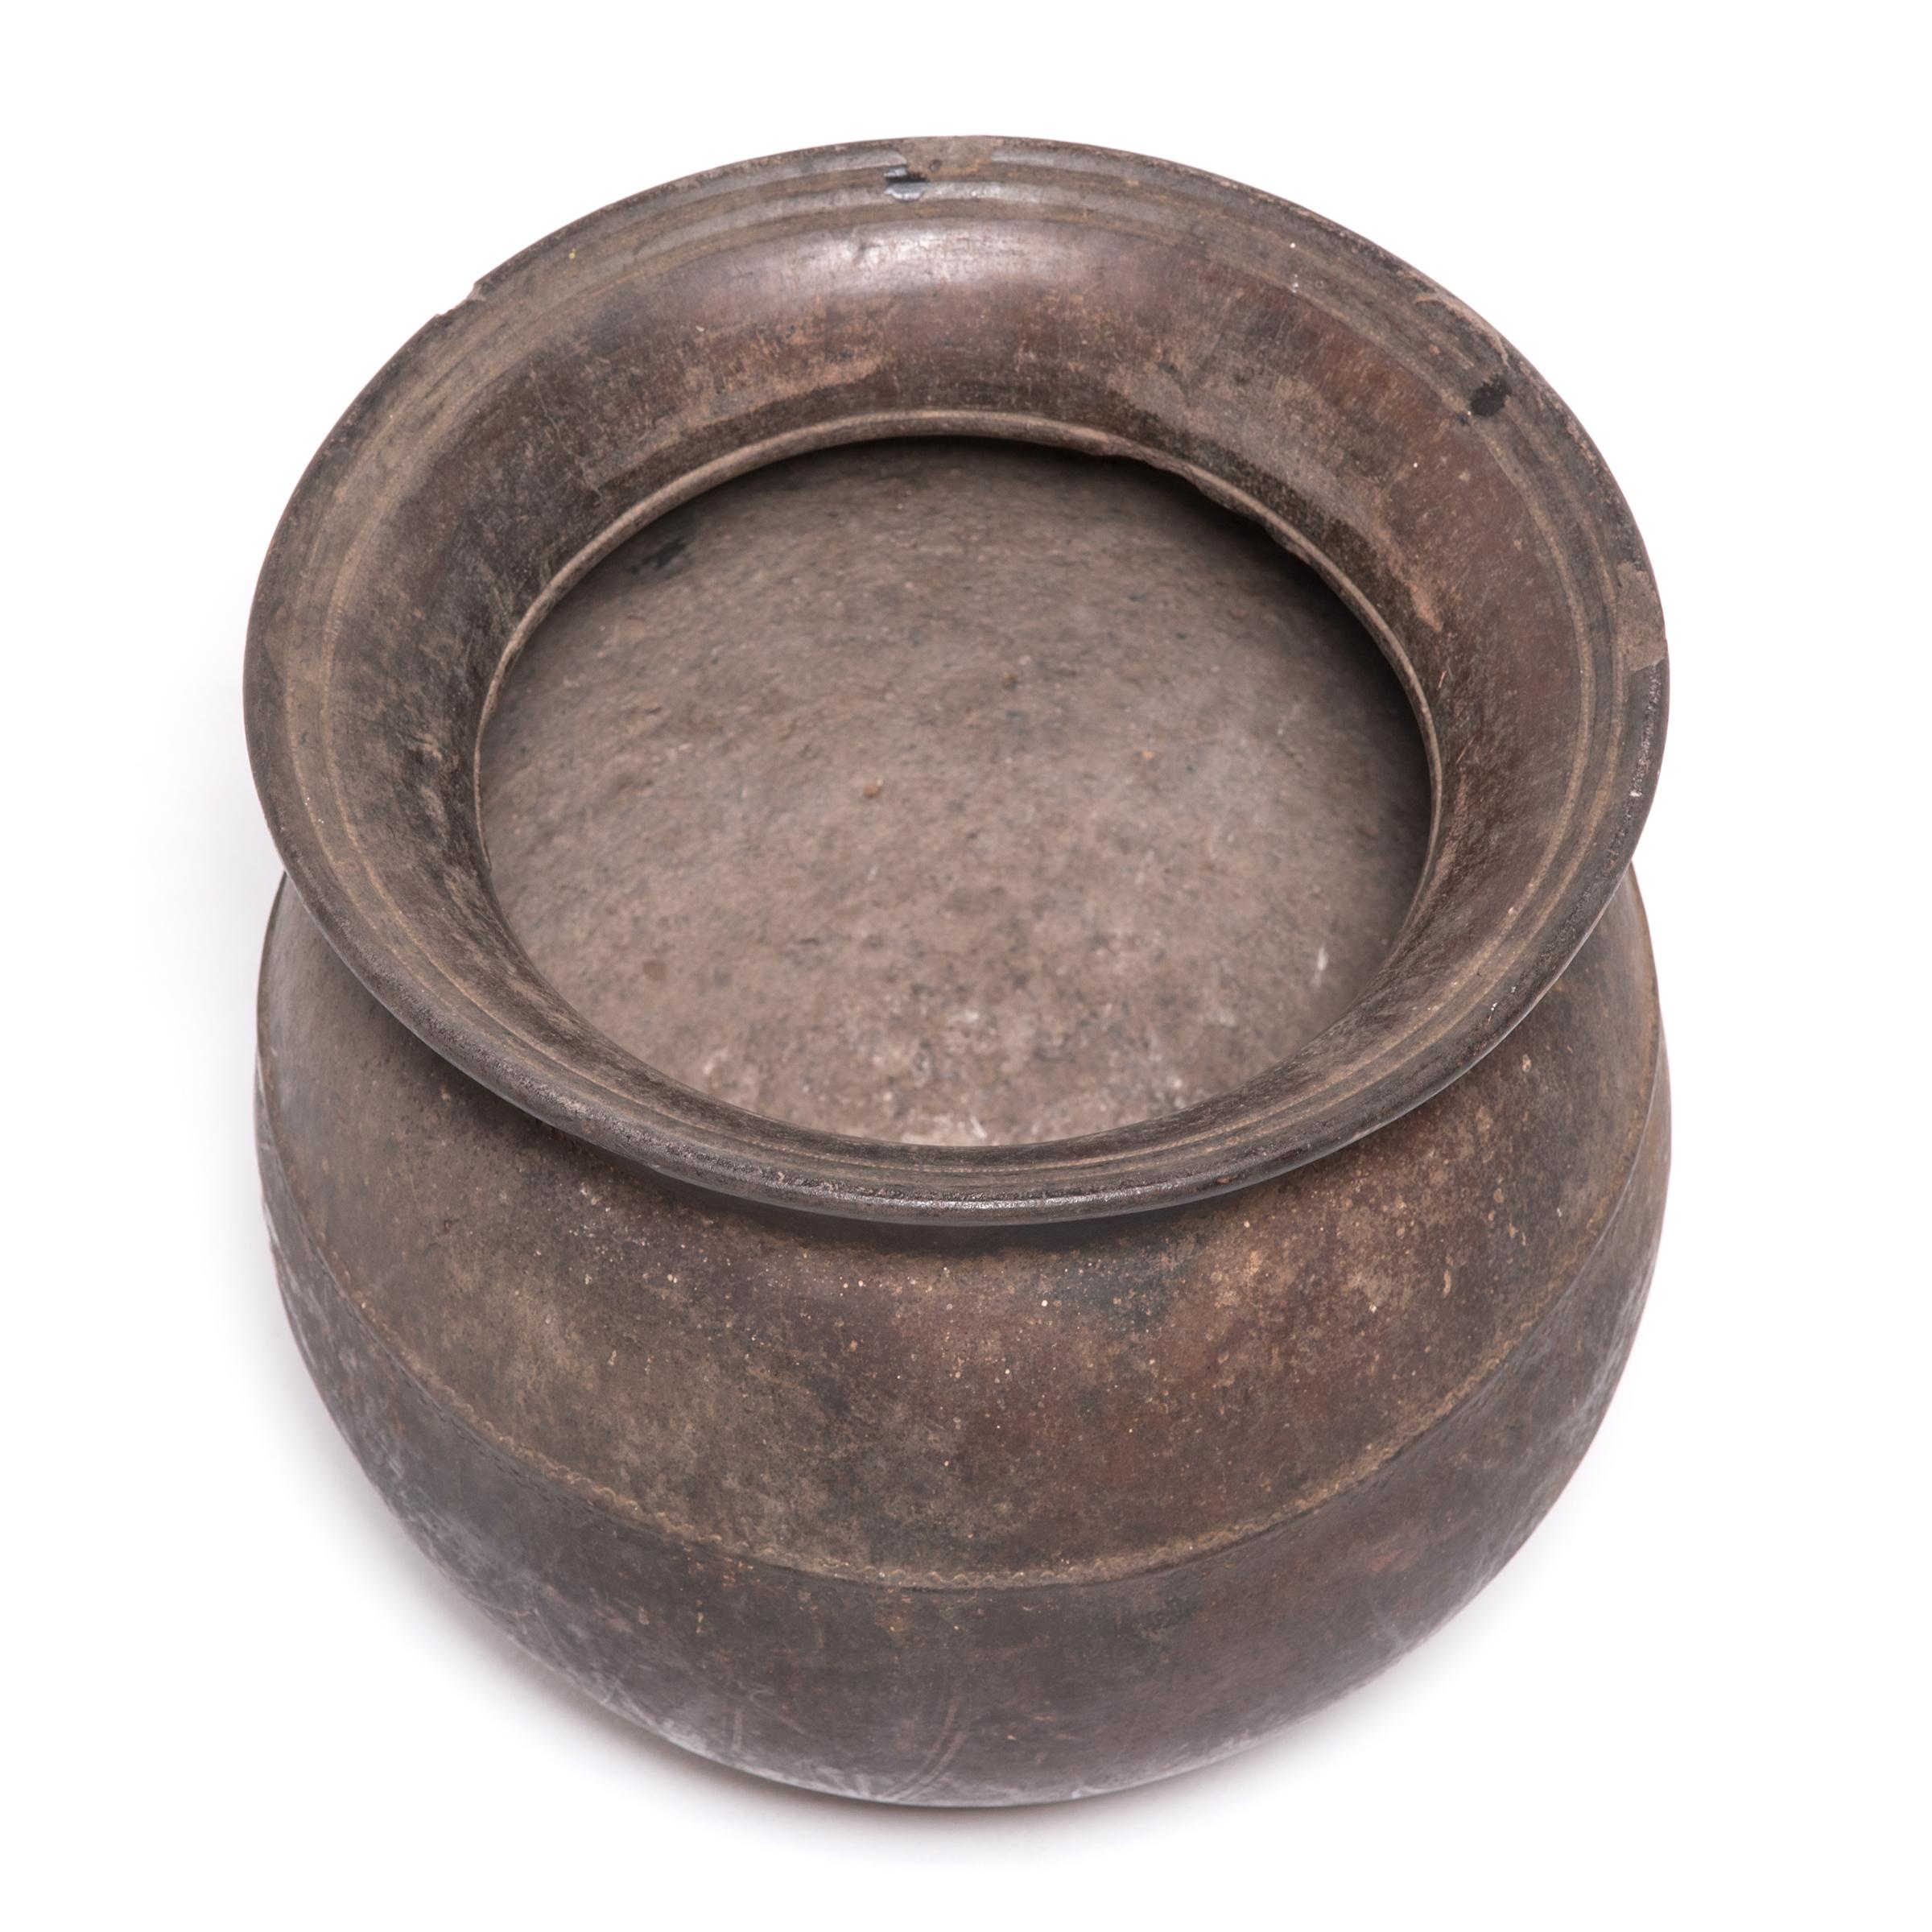 Ceramic Early 20th Century Nigerian Bamileke Storage Vessel